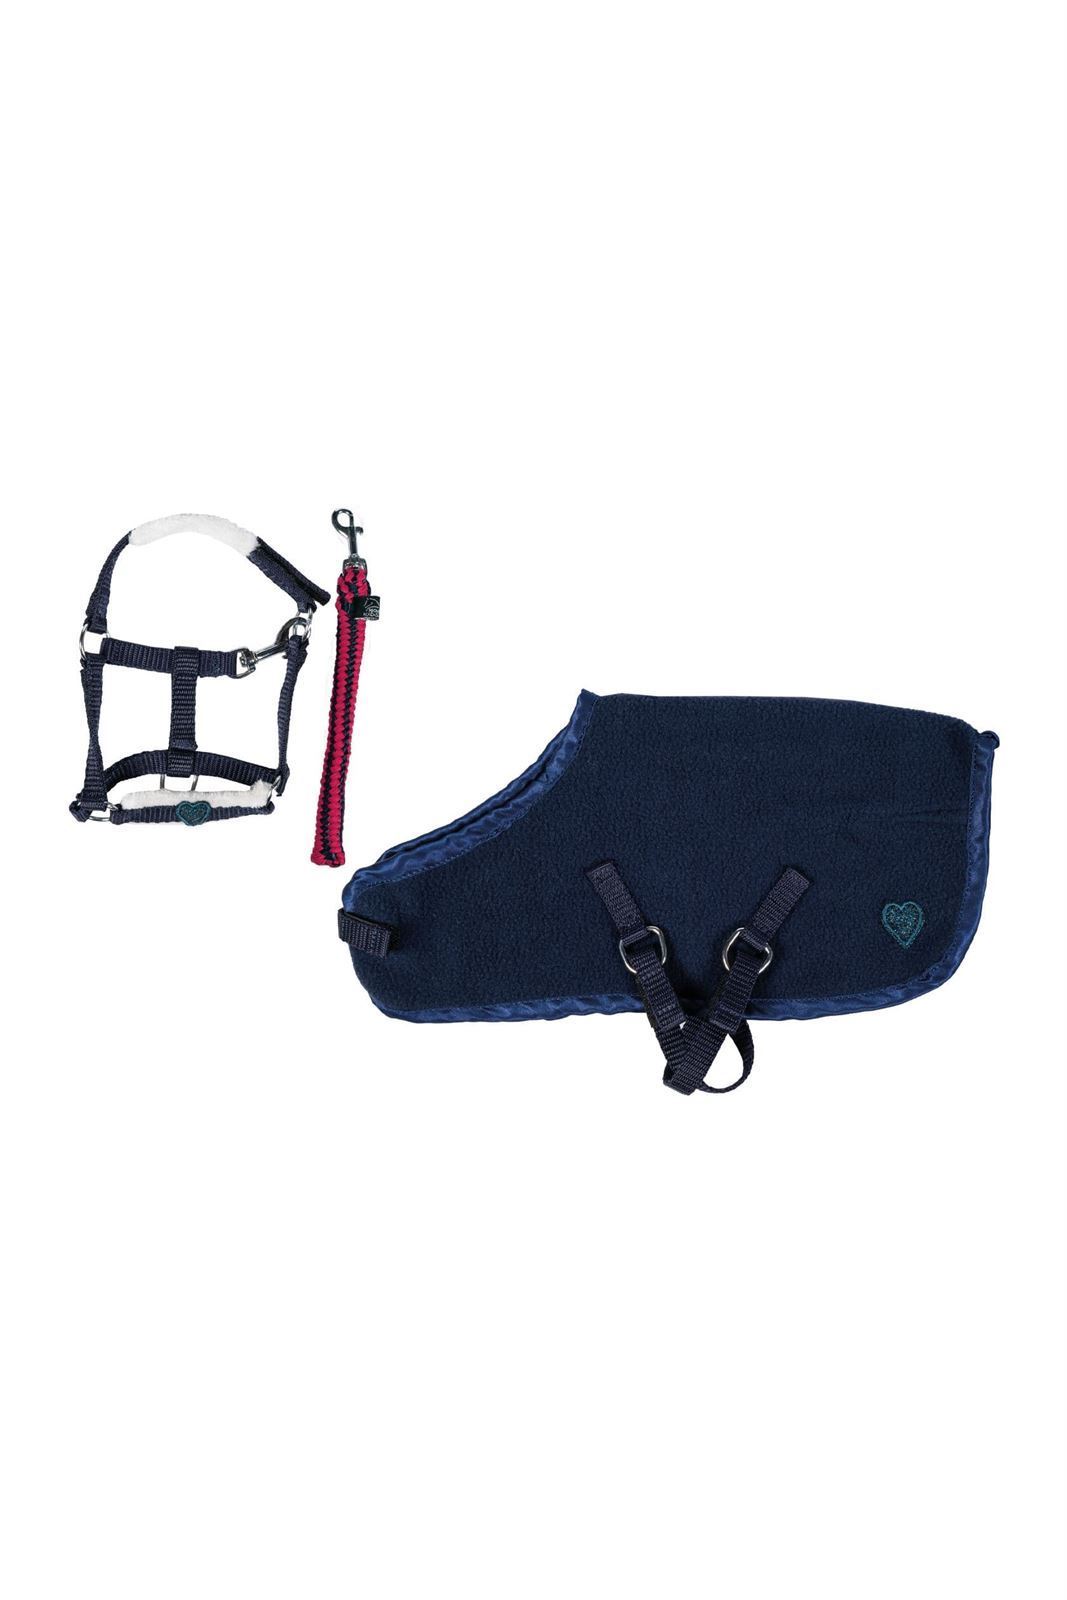 Set accesorios Cuddle pony HKM Sports Equipment Manta, cabezada y ramal, color azul marino - Imagen 1